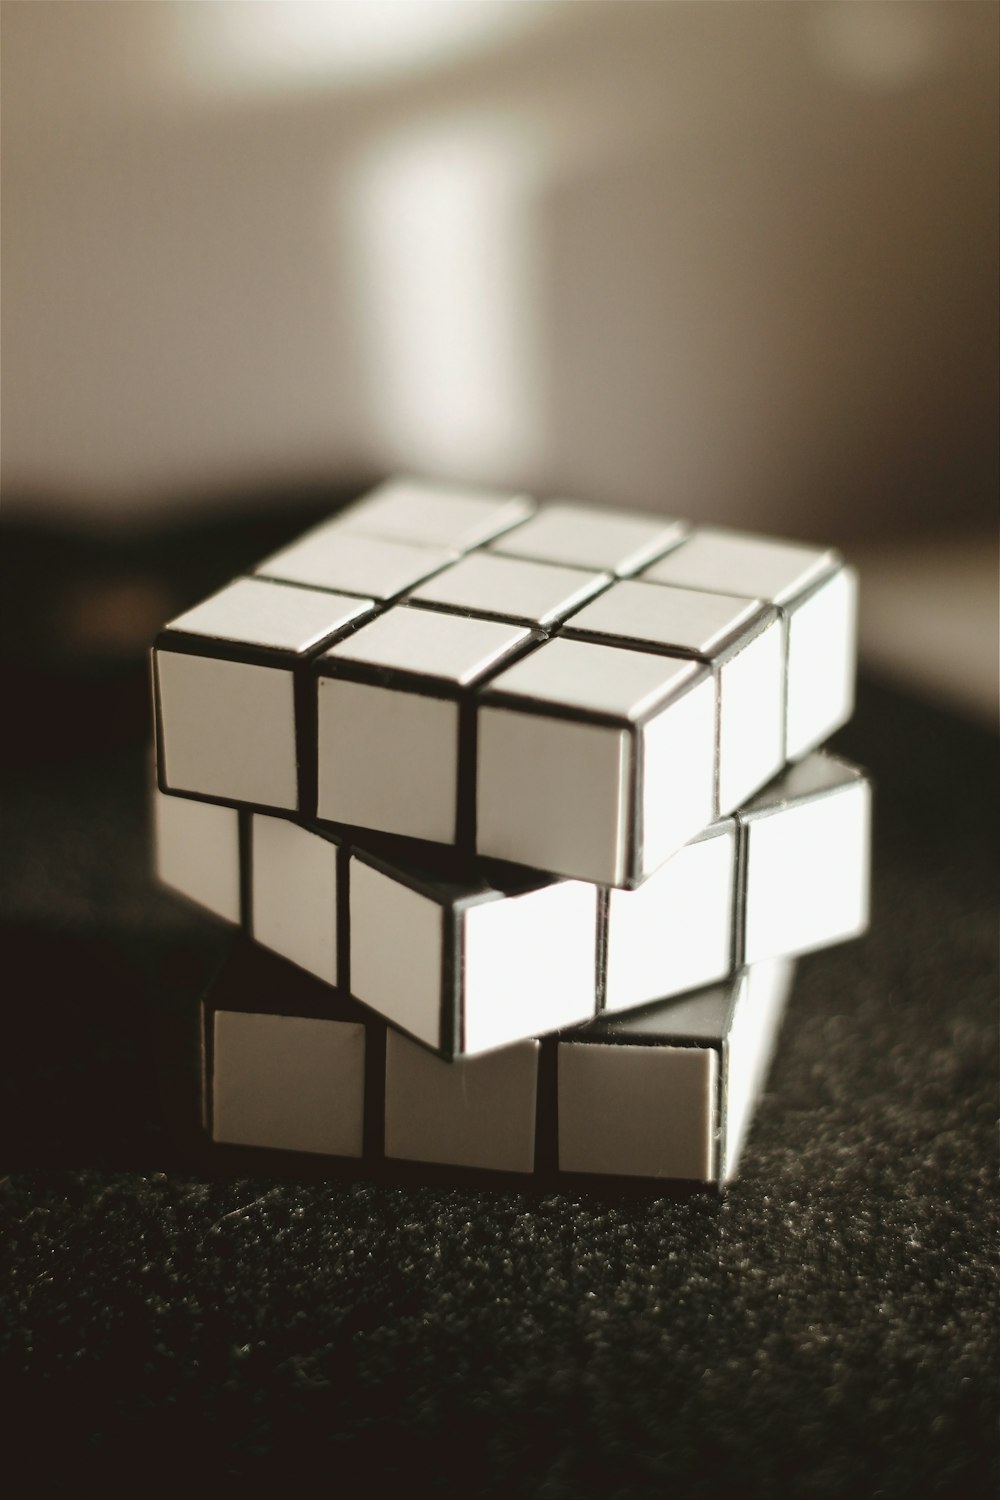 white and black 3 x 3 rubiks cube